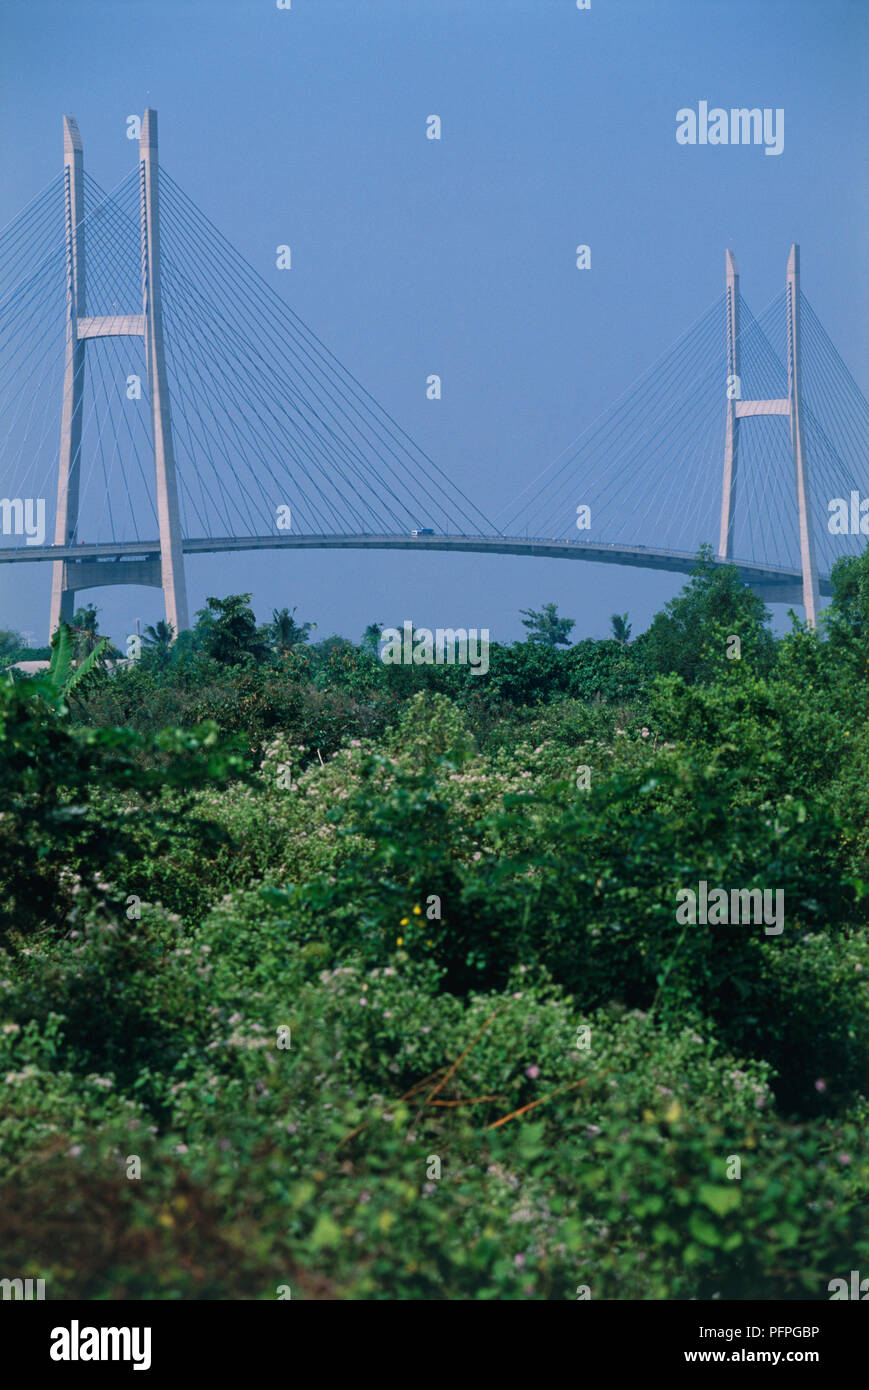 Vietnam, Mekong Delta, My Thuan bridge, modern cable stayed bridge pylons towering above trees Stock Photo